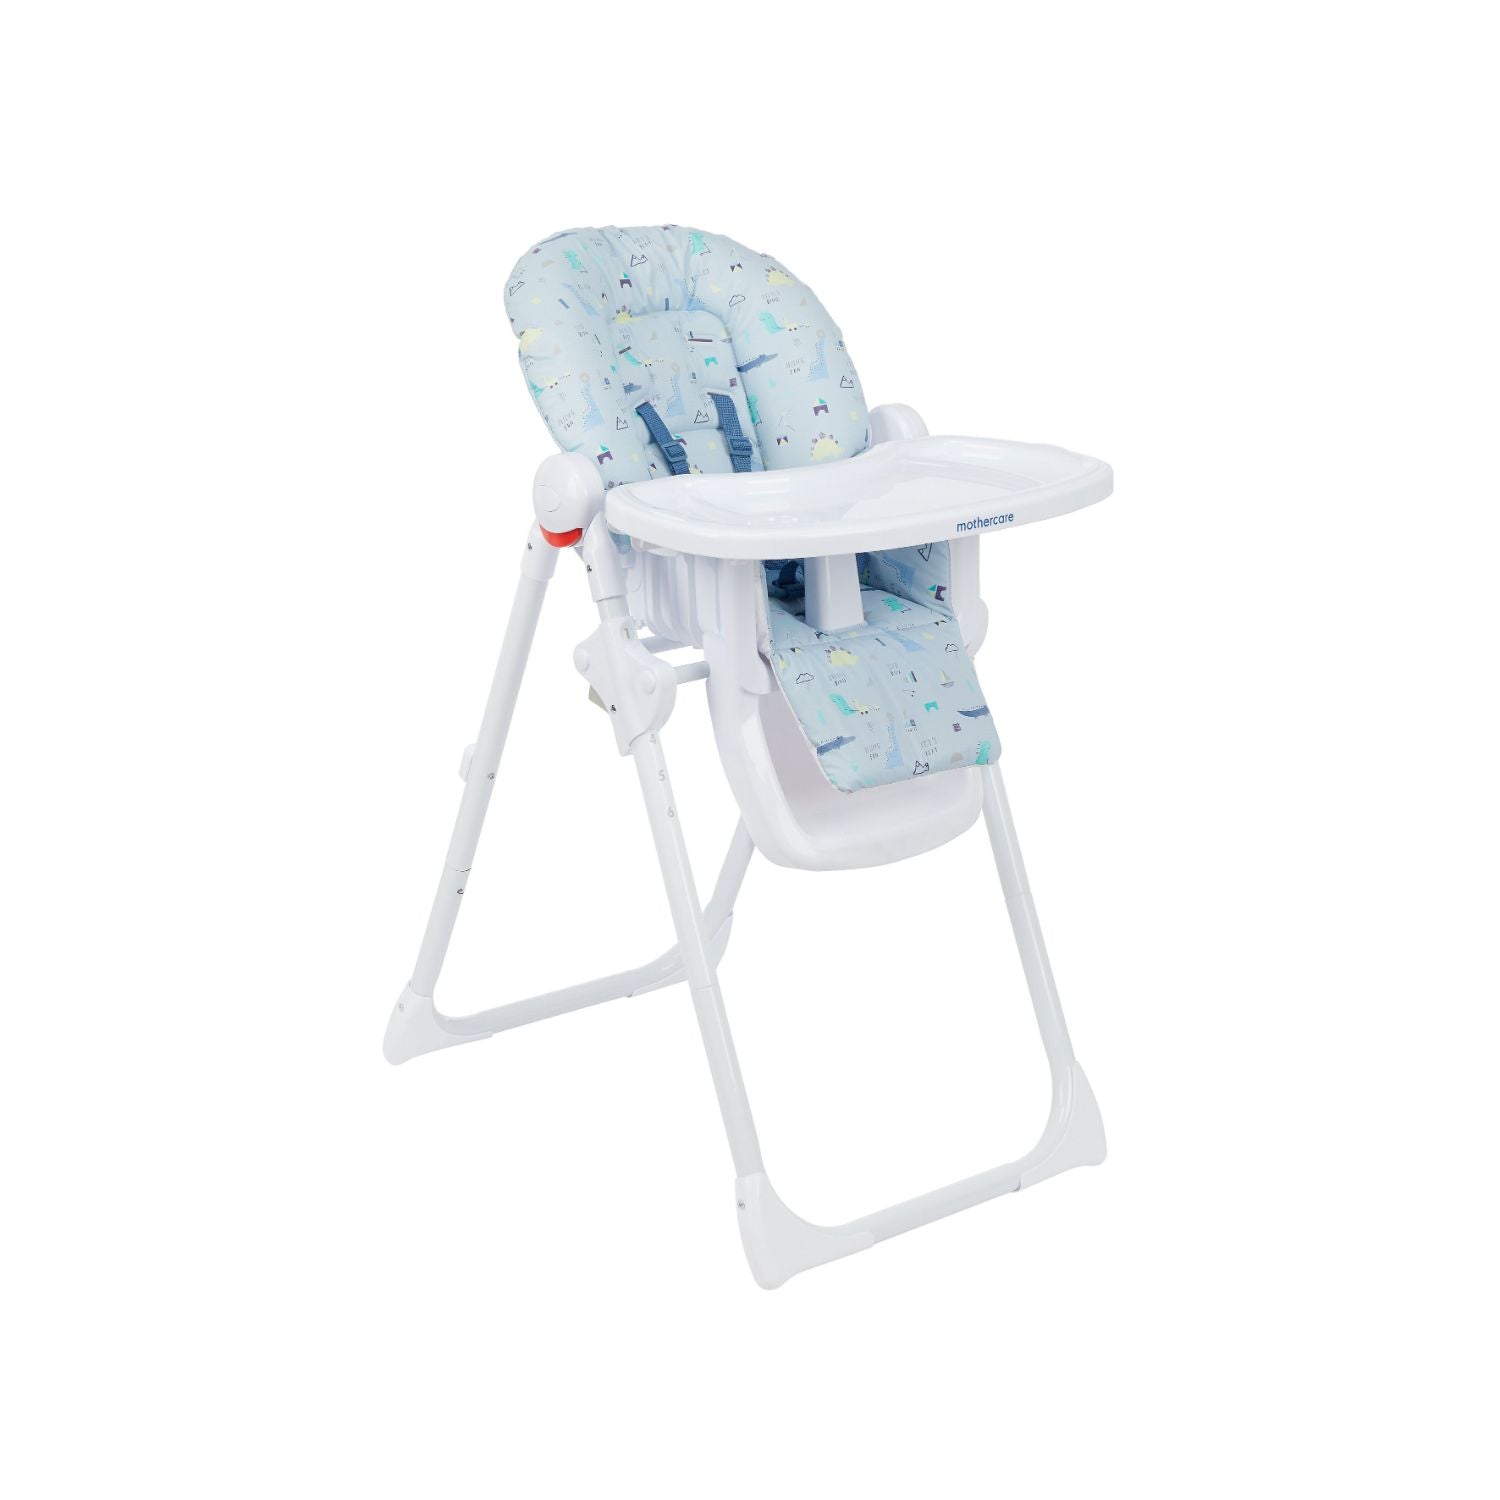 Mothercare Sleepysaurus Baby Highchair